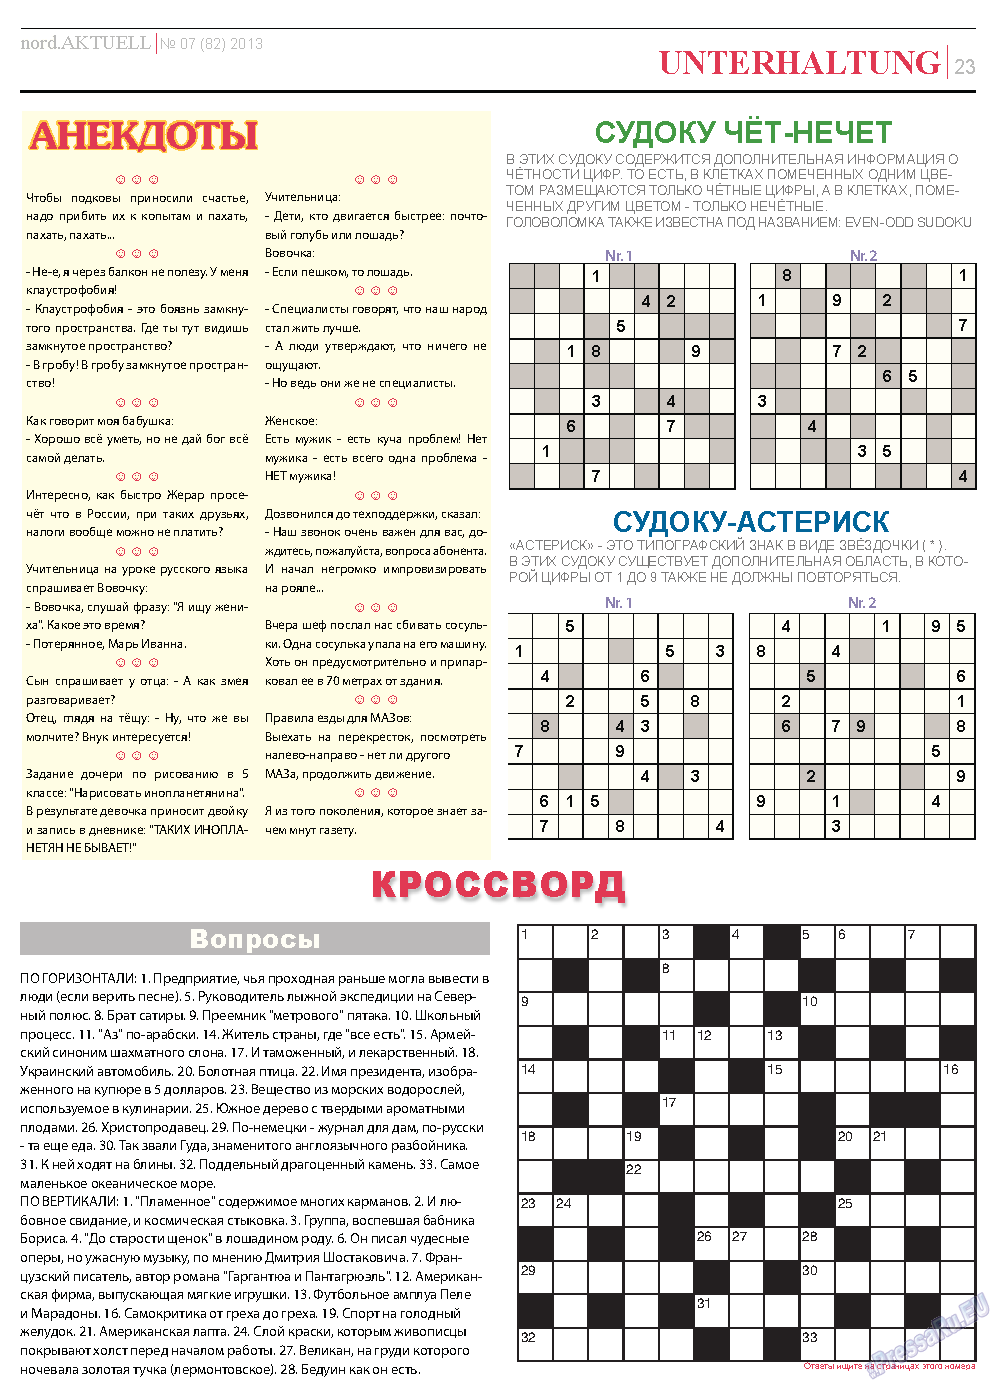 nord.Aktuell (газета). 2013 год, номер 7, стр. 23